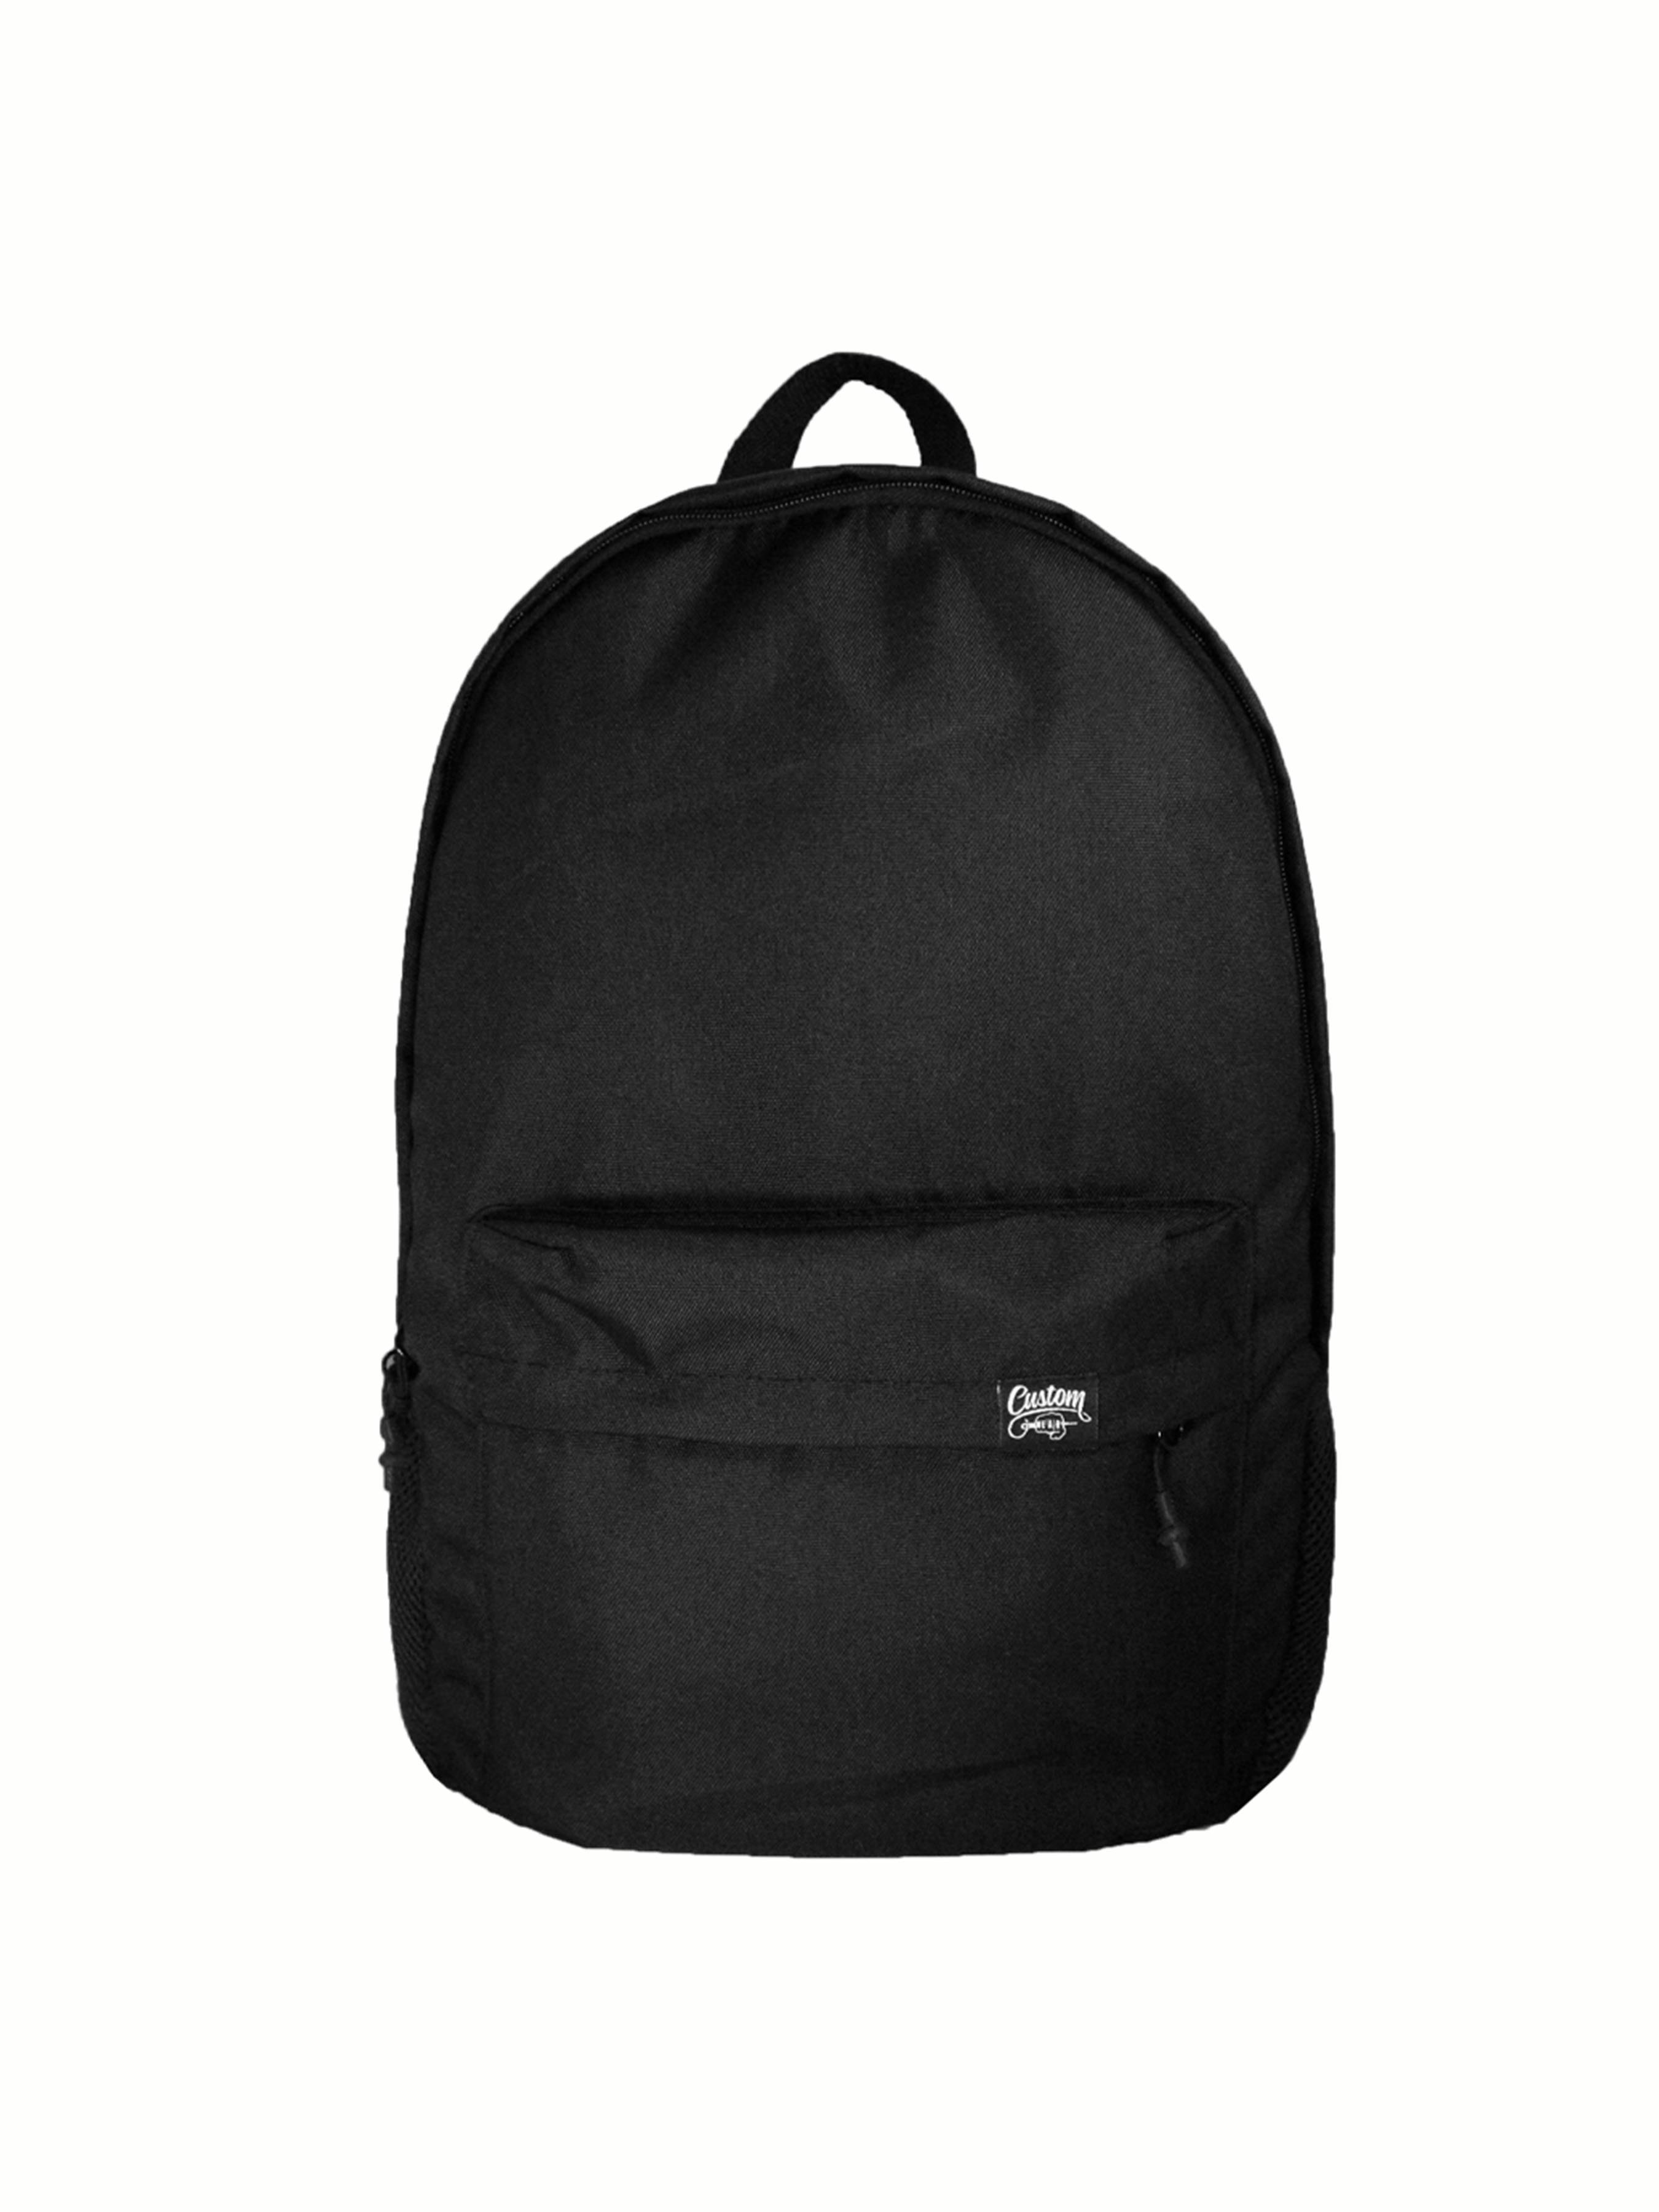 Рюкзак Custom Wear Duo 2.0 чорний - Фото 1